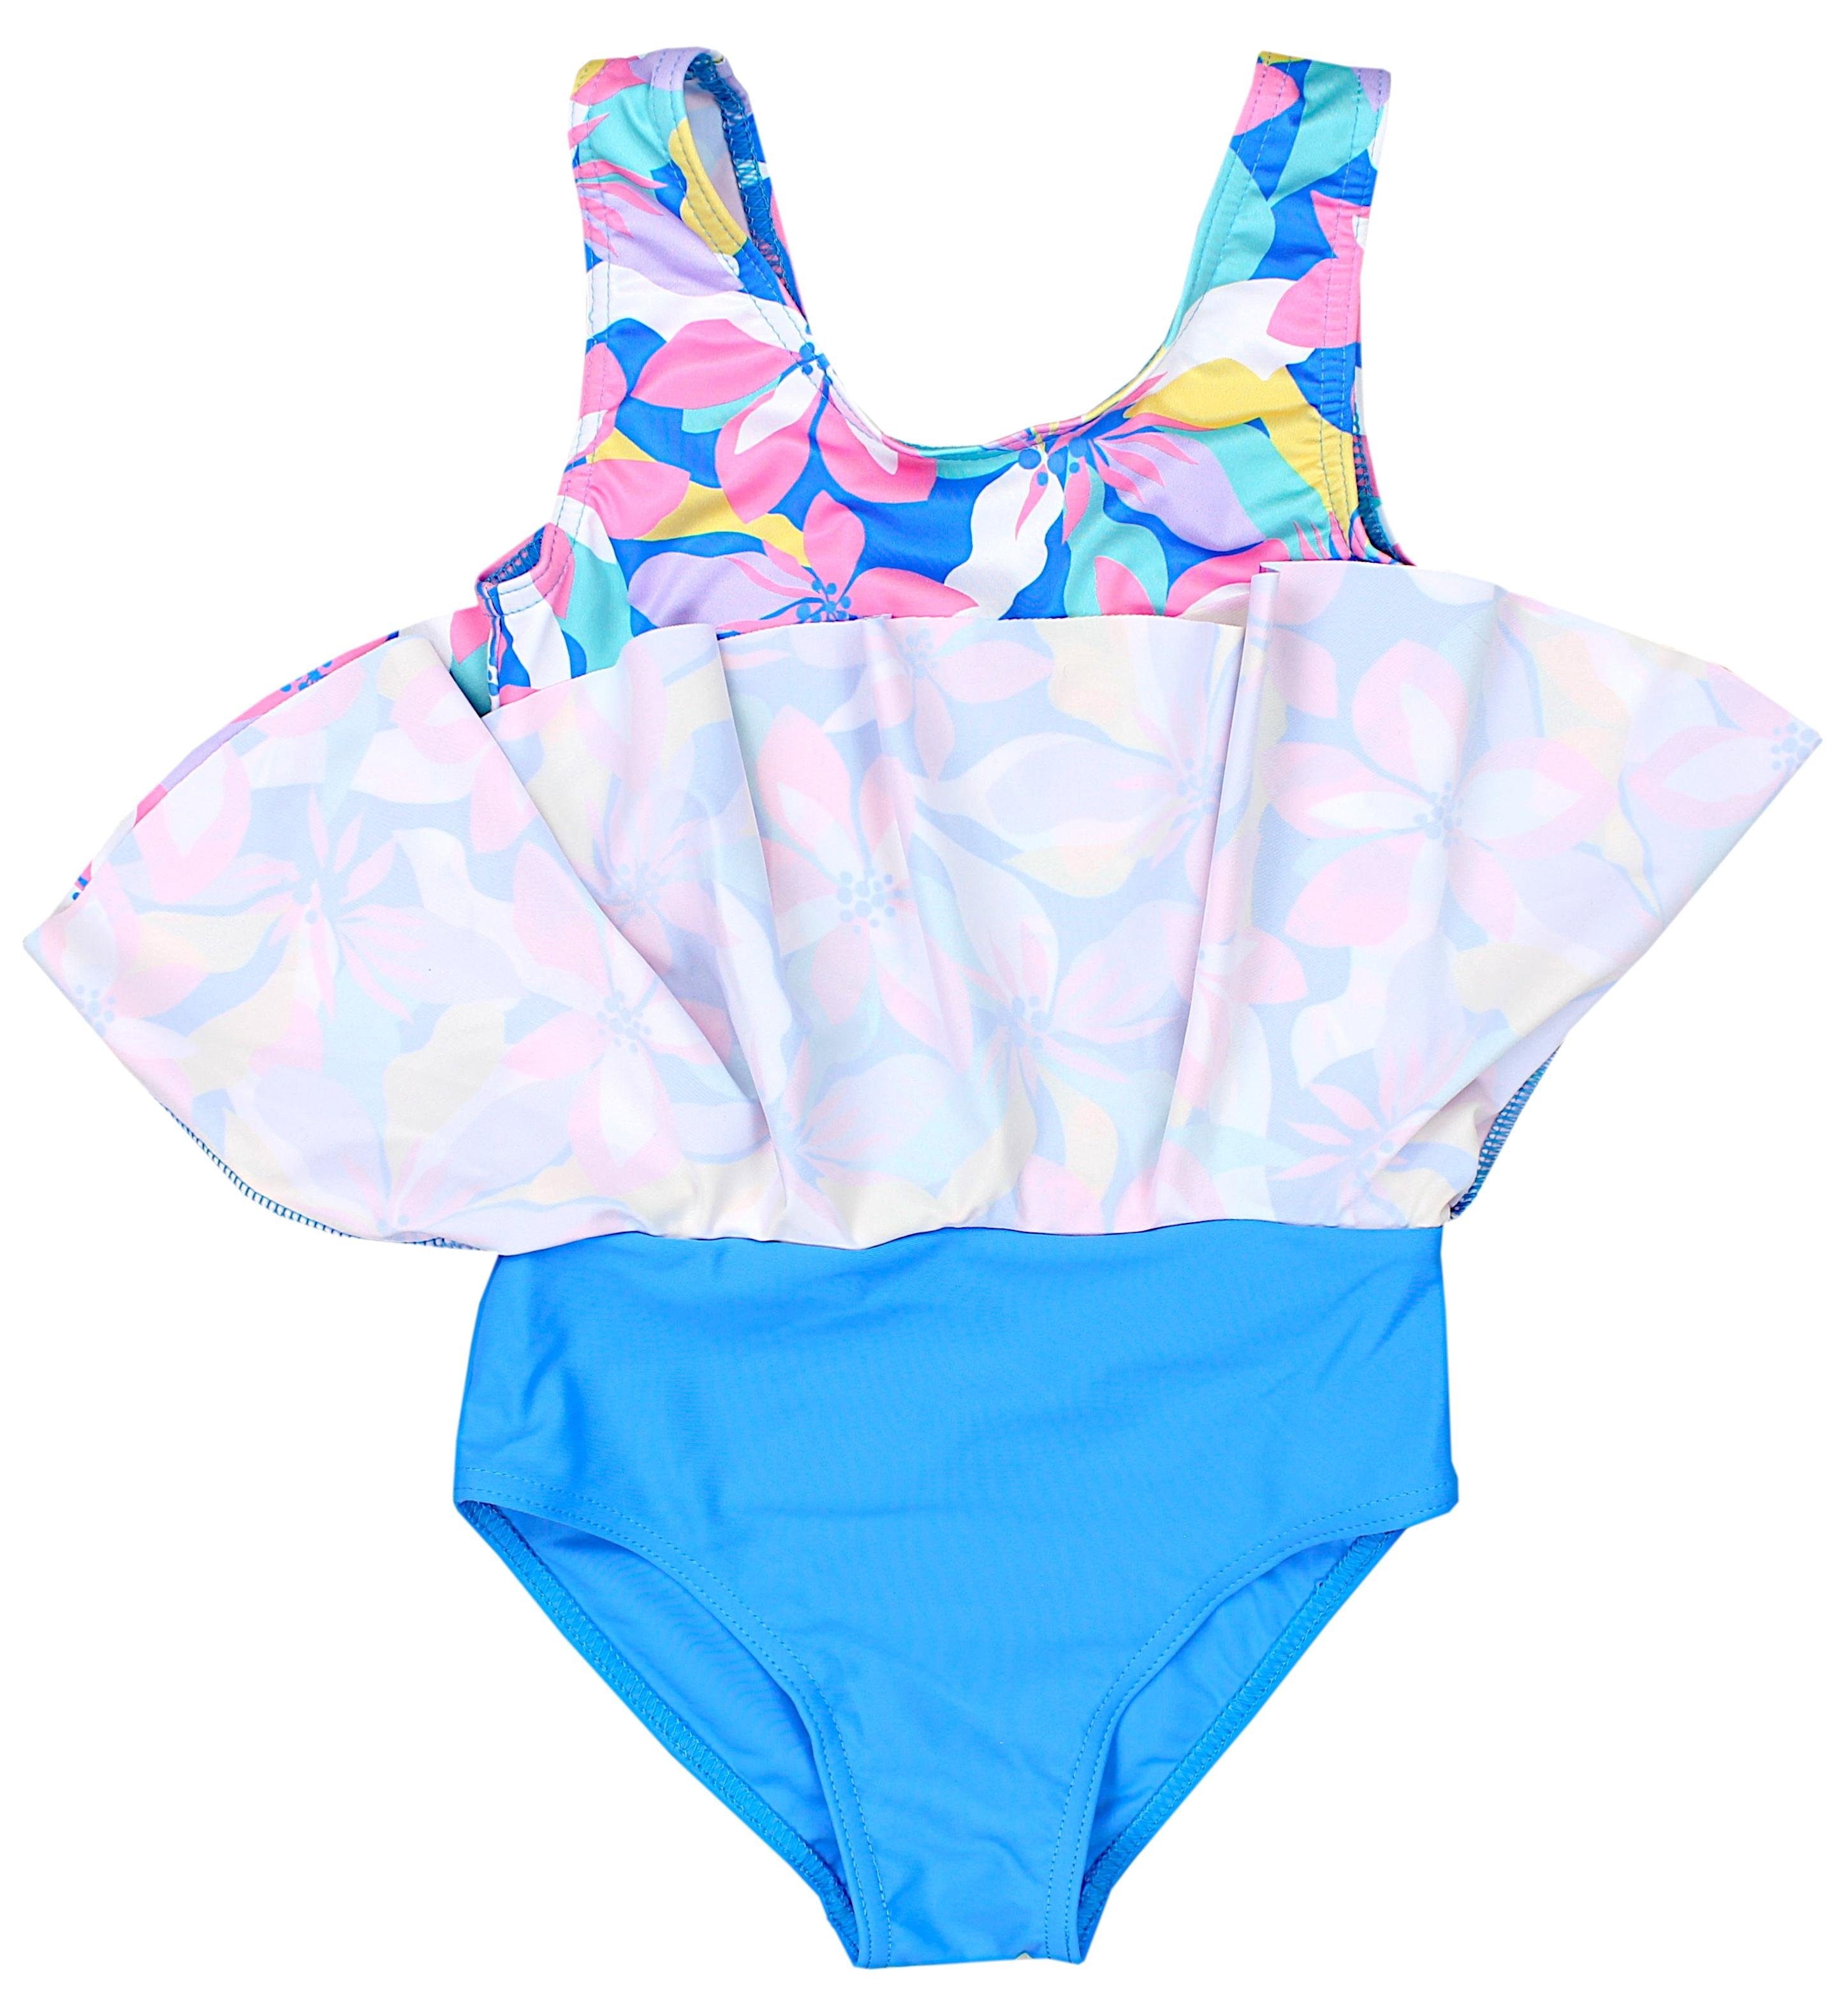 Aquarti Badeanzug Aquarti Mädchen Print Gelb / / mit Badeanzug Blumen / Ringerrücken Rosa Rock Blau 029D mit 